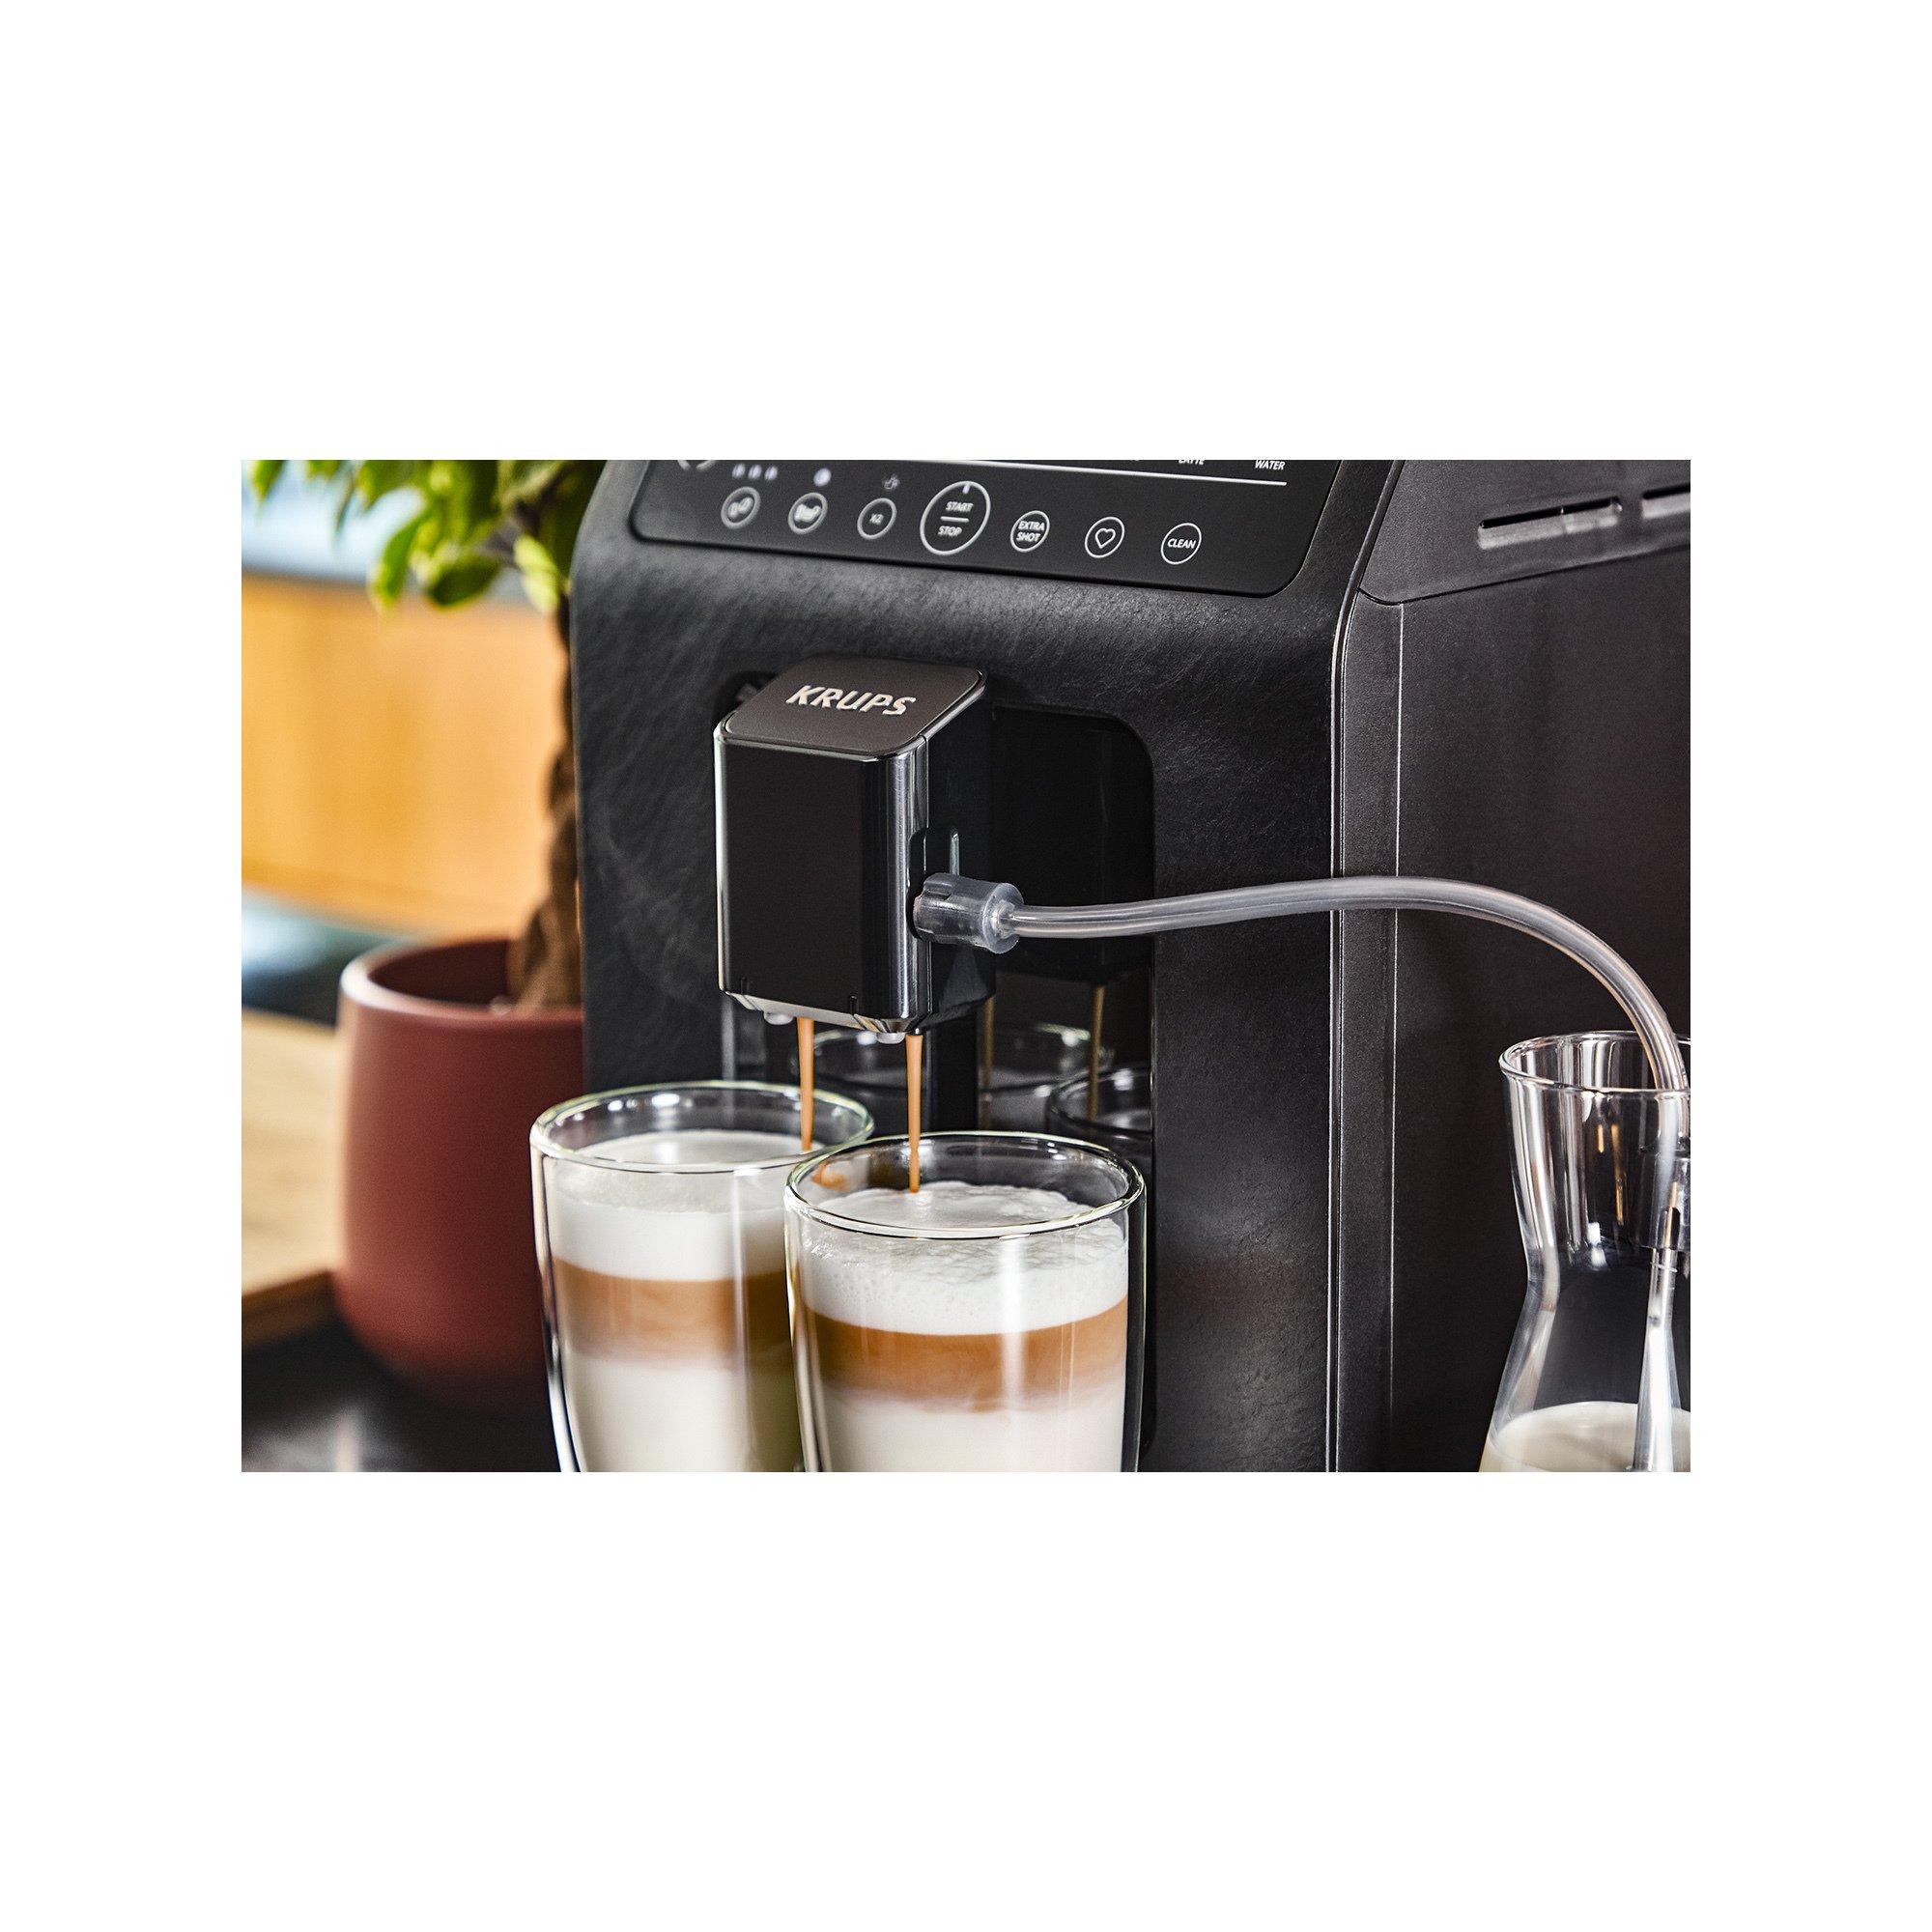 KRUPS Kaffeevollautomat Evidence Eco-Design 